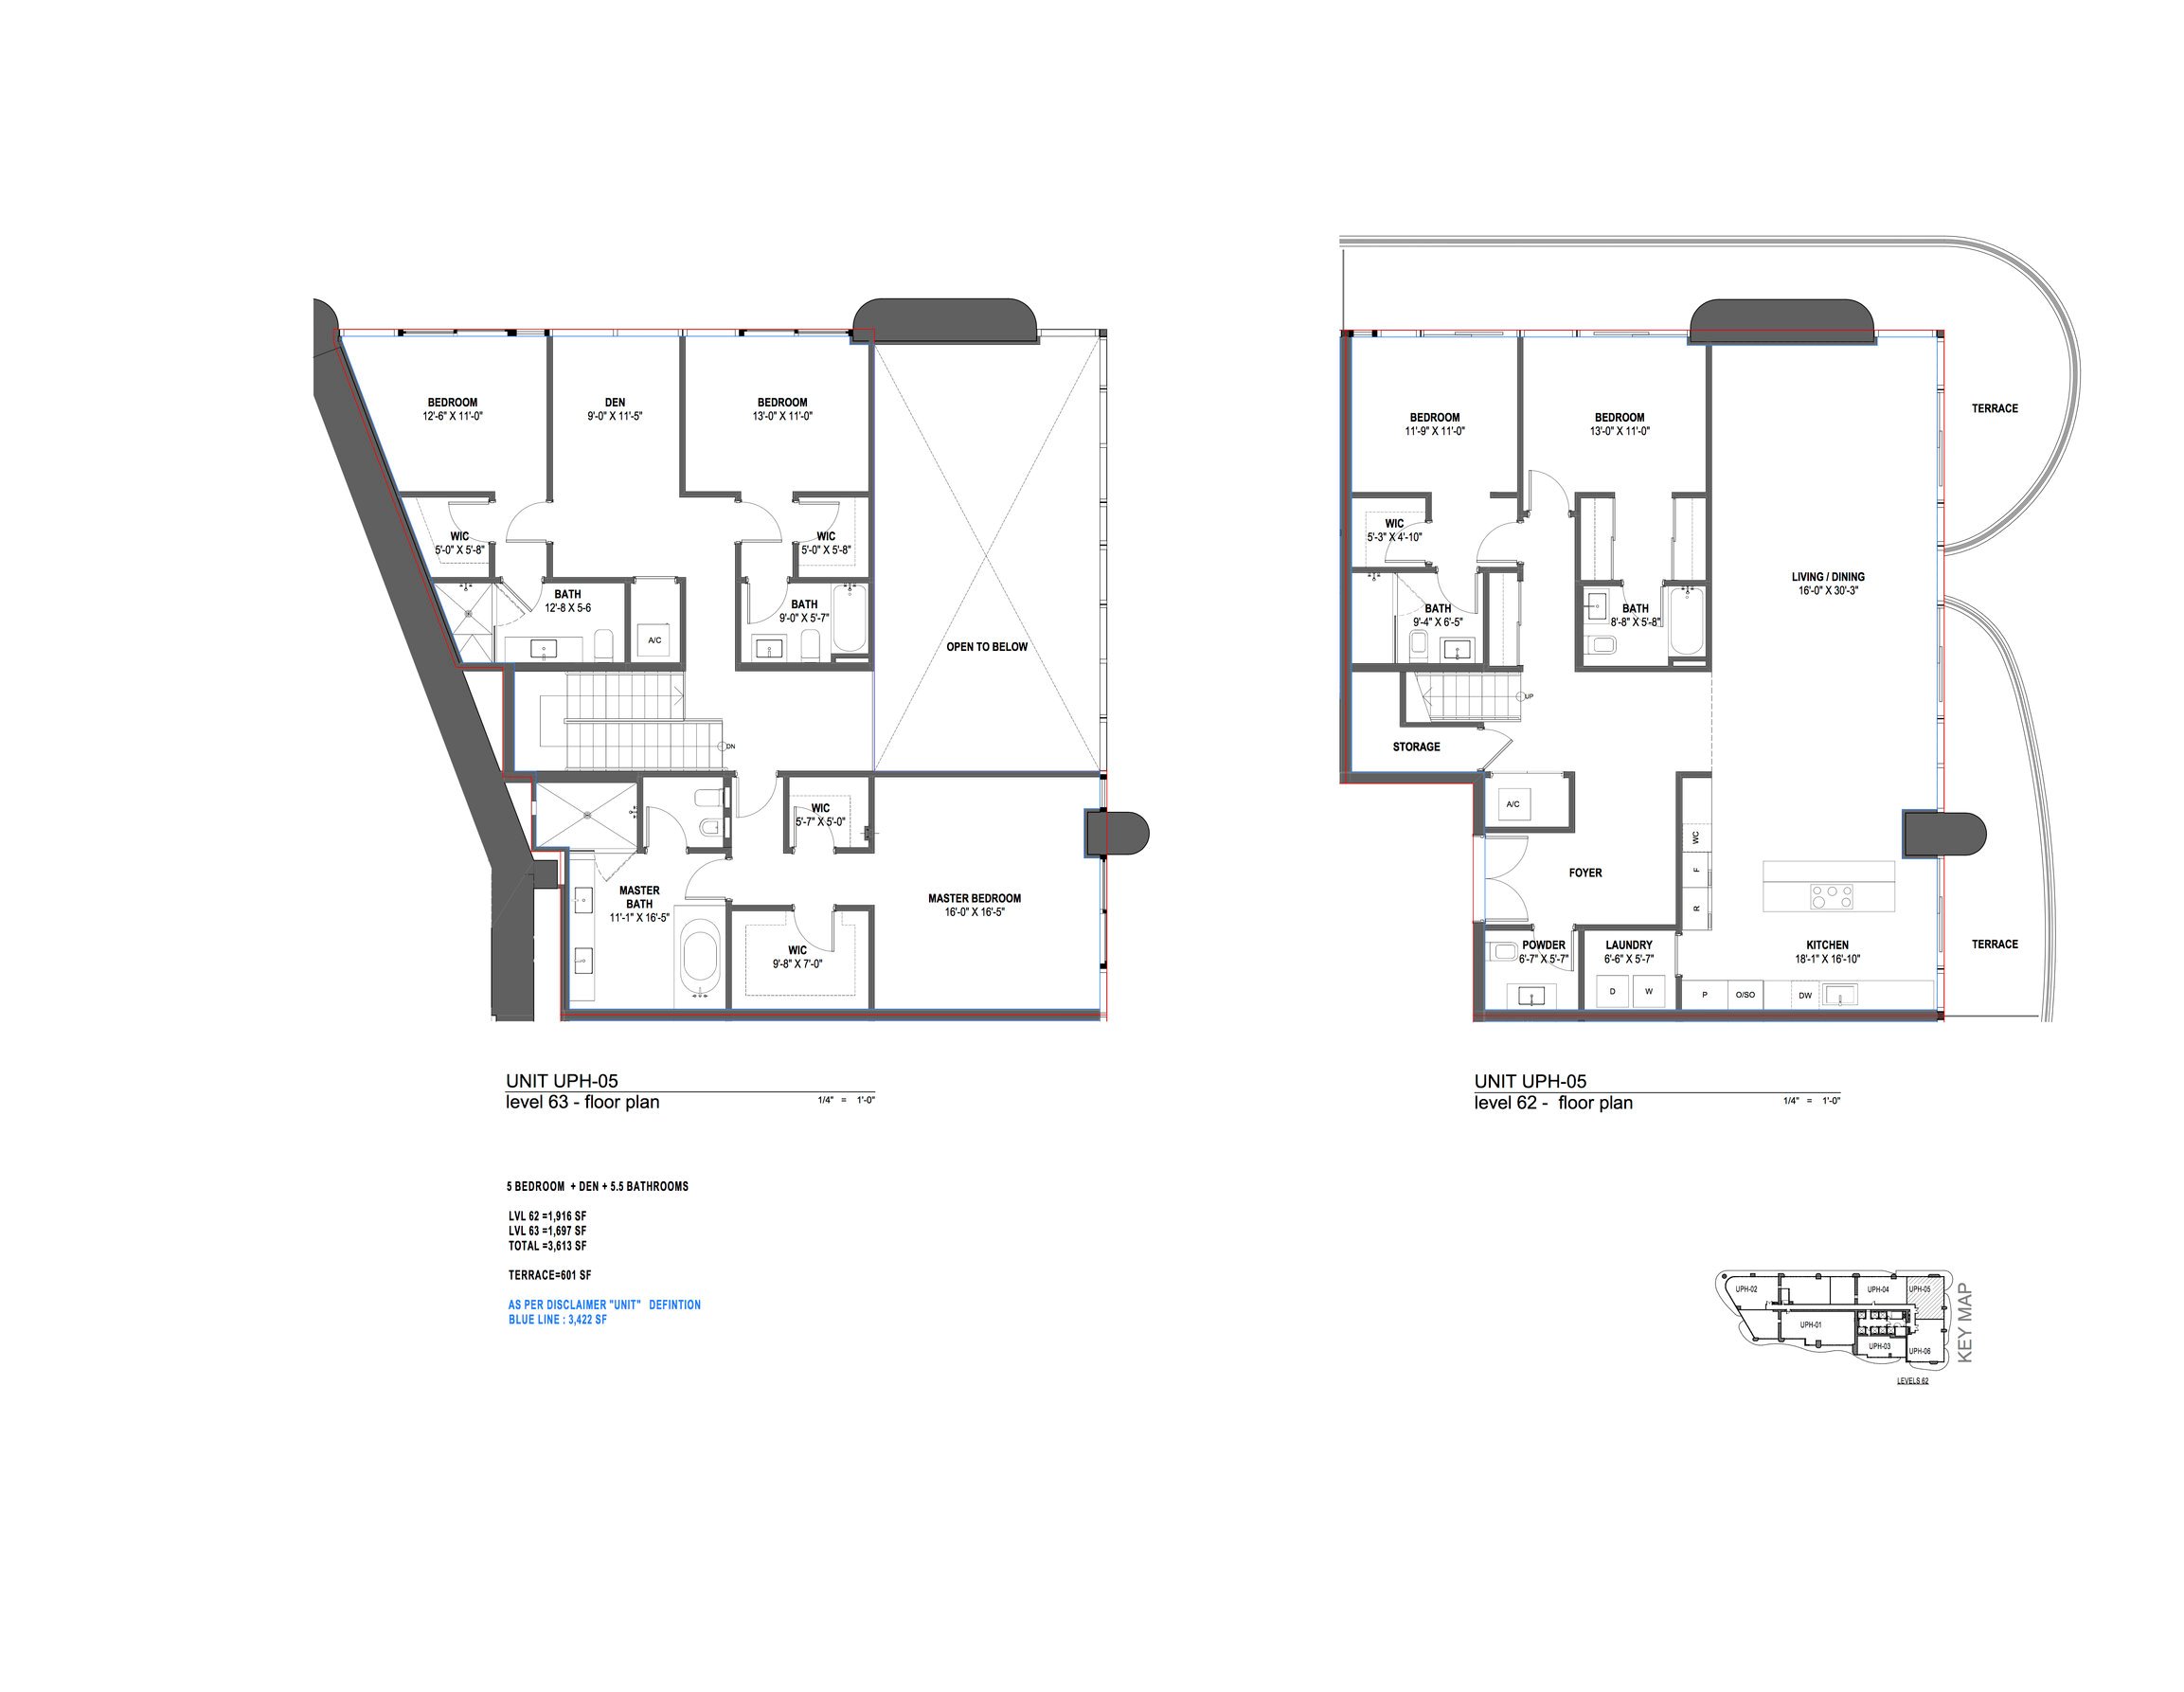 Brickell Flatiron Upper Penthouse 05 Level 62-63